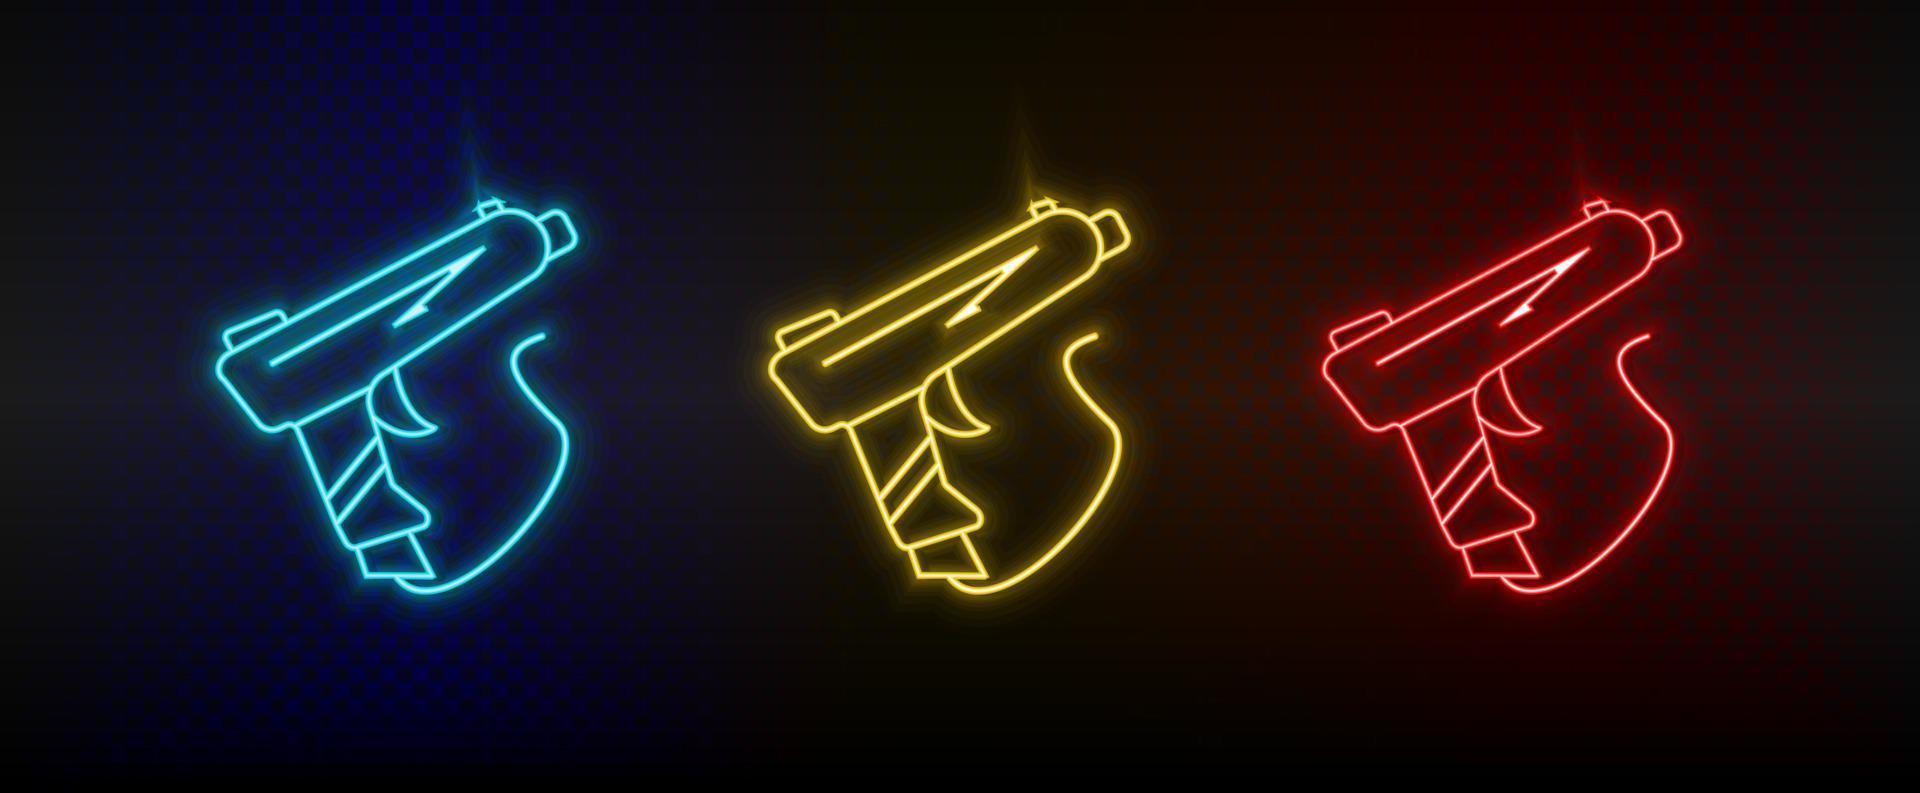 iconos de neón. juego de disparos de armas arcade retro. conjunto de icono de vector de neón rojo, azul, amarillo sobre fondo oscuro